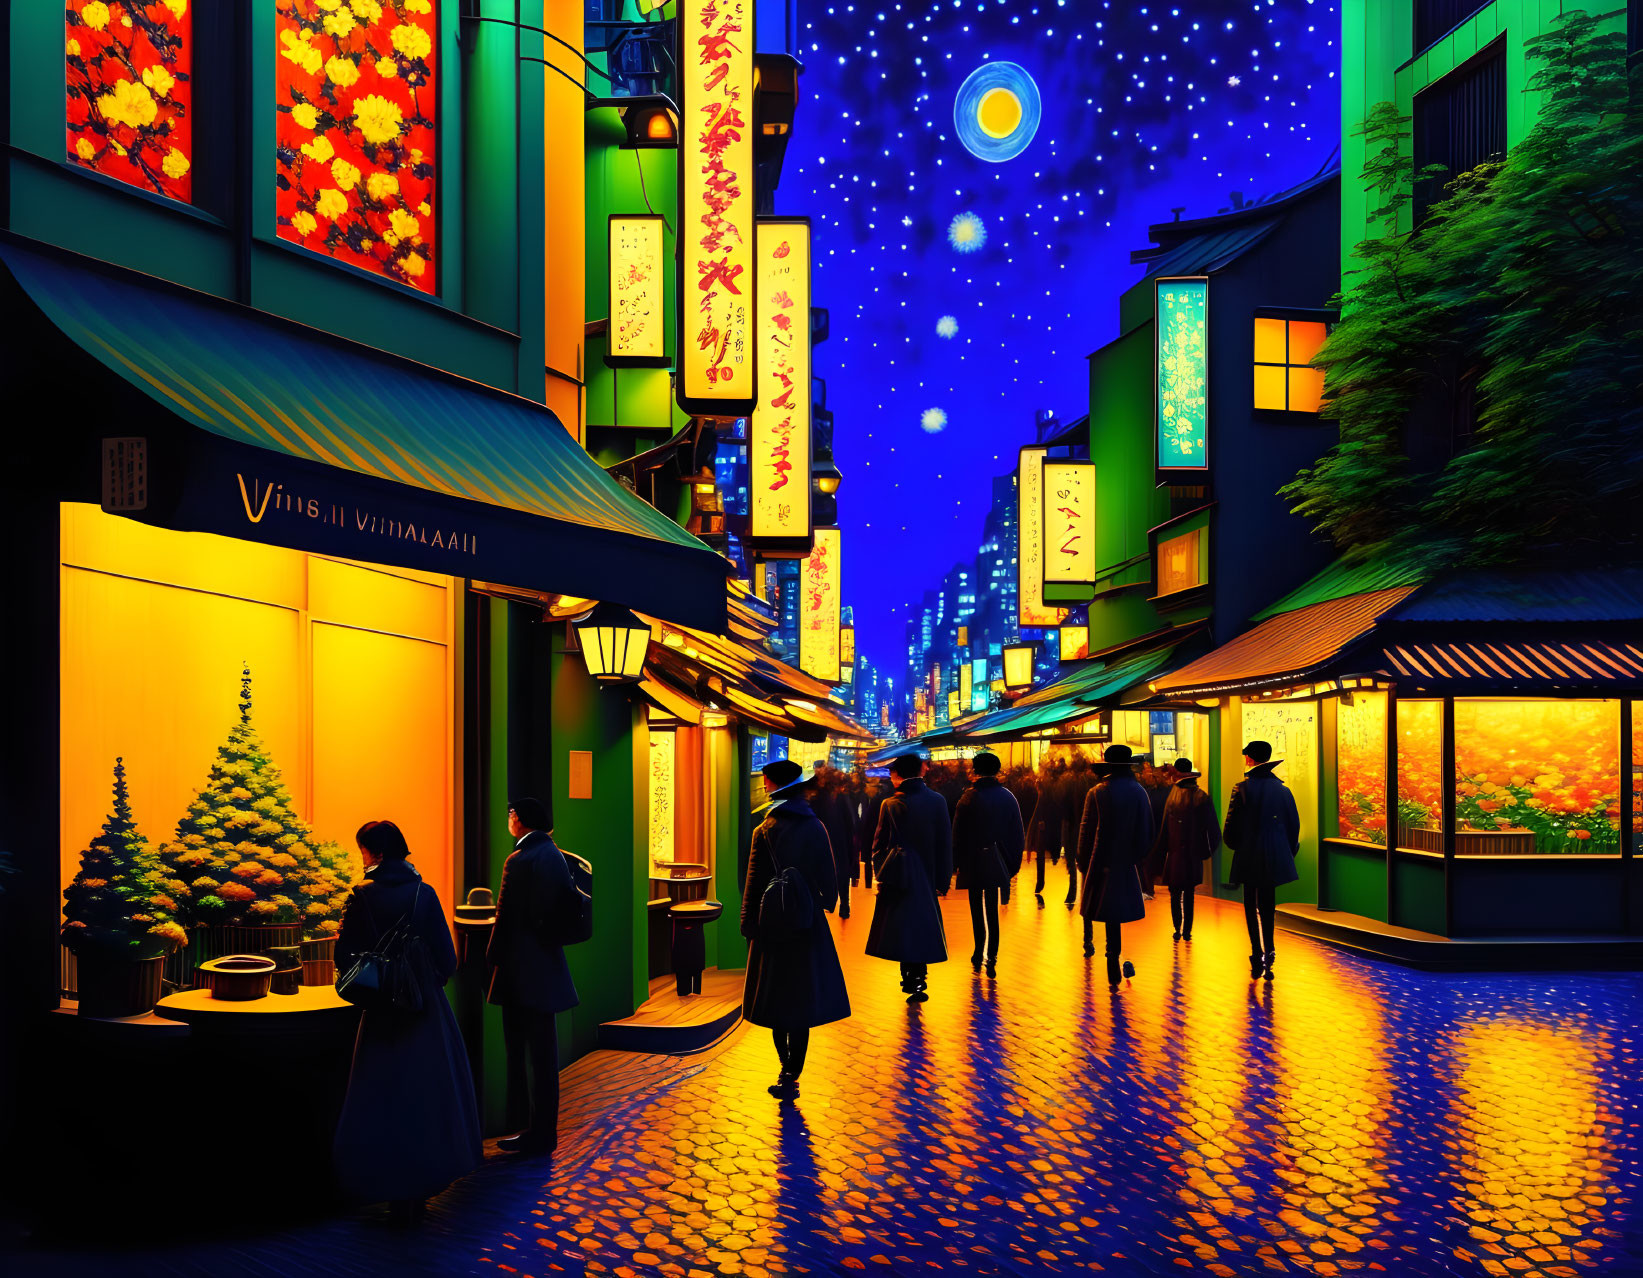 Shibuya by Night - Style of Van Gogh